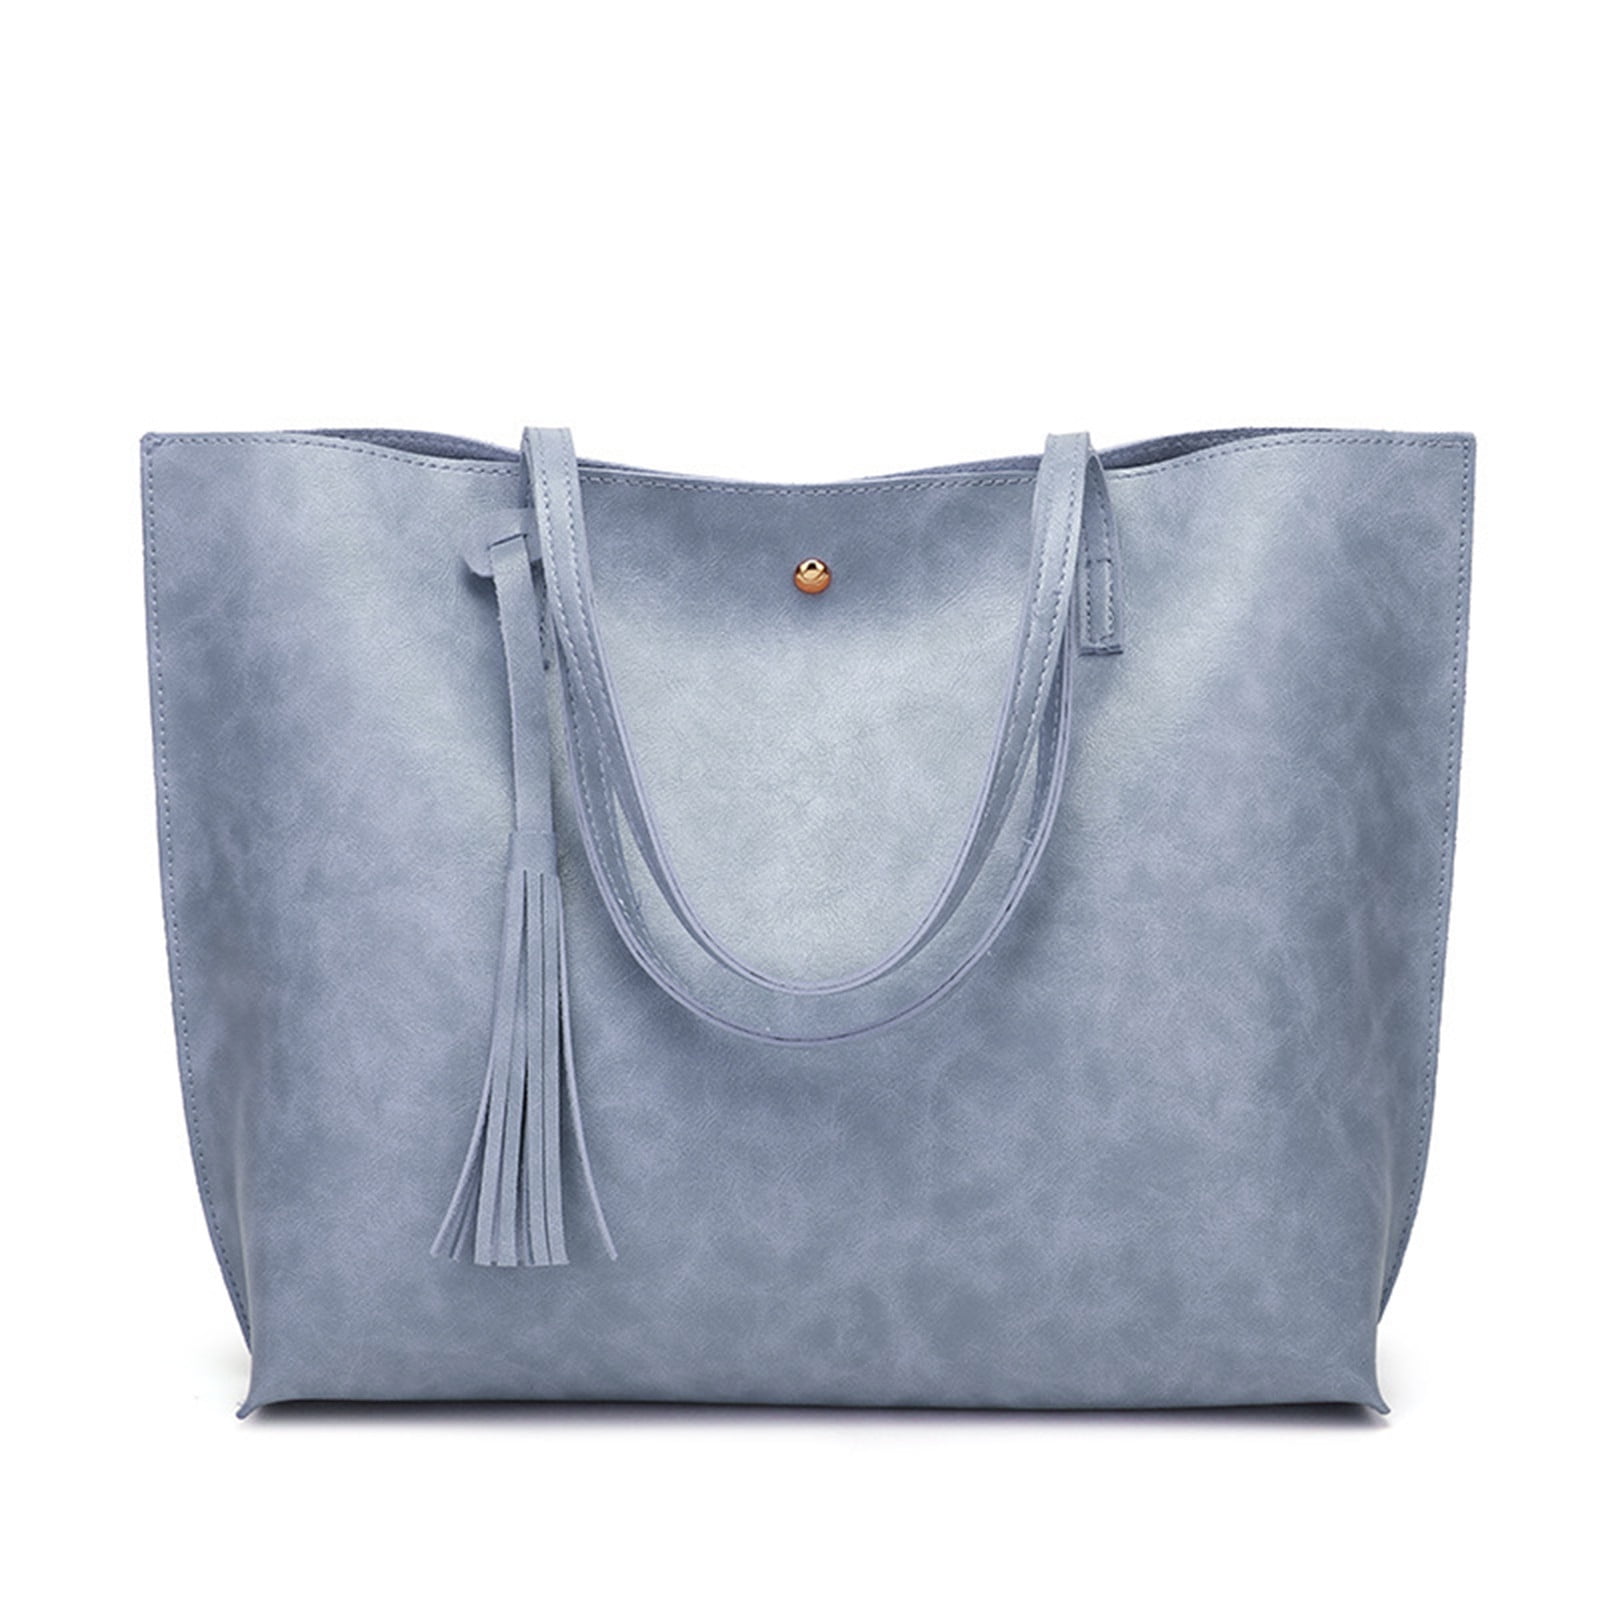 Woxinda Tote Bag for Women Fashion Womens Handbags Ladies Purse Satchel Shoulder Bags Tote Leather Bag Sublimation Tote Bags Handbag Organizers for